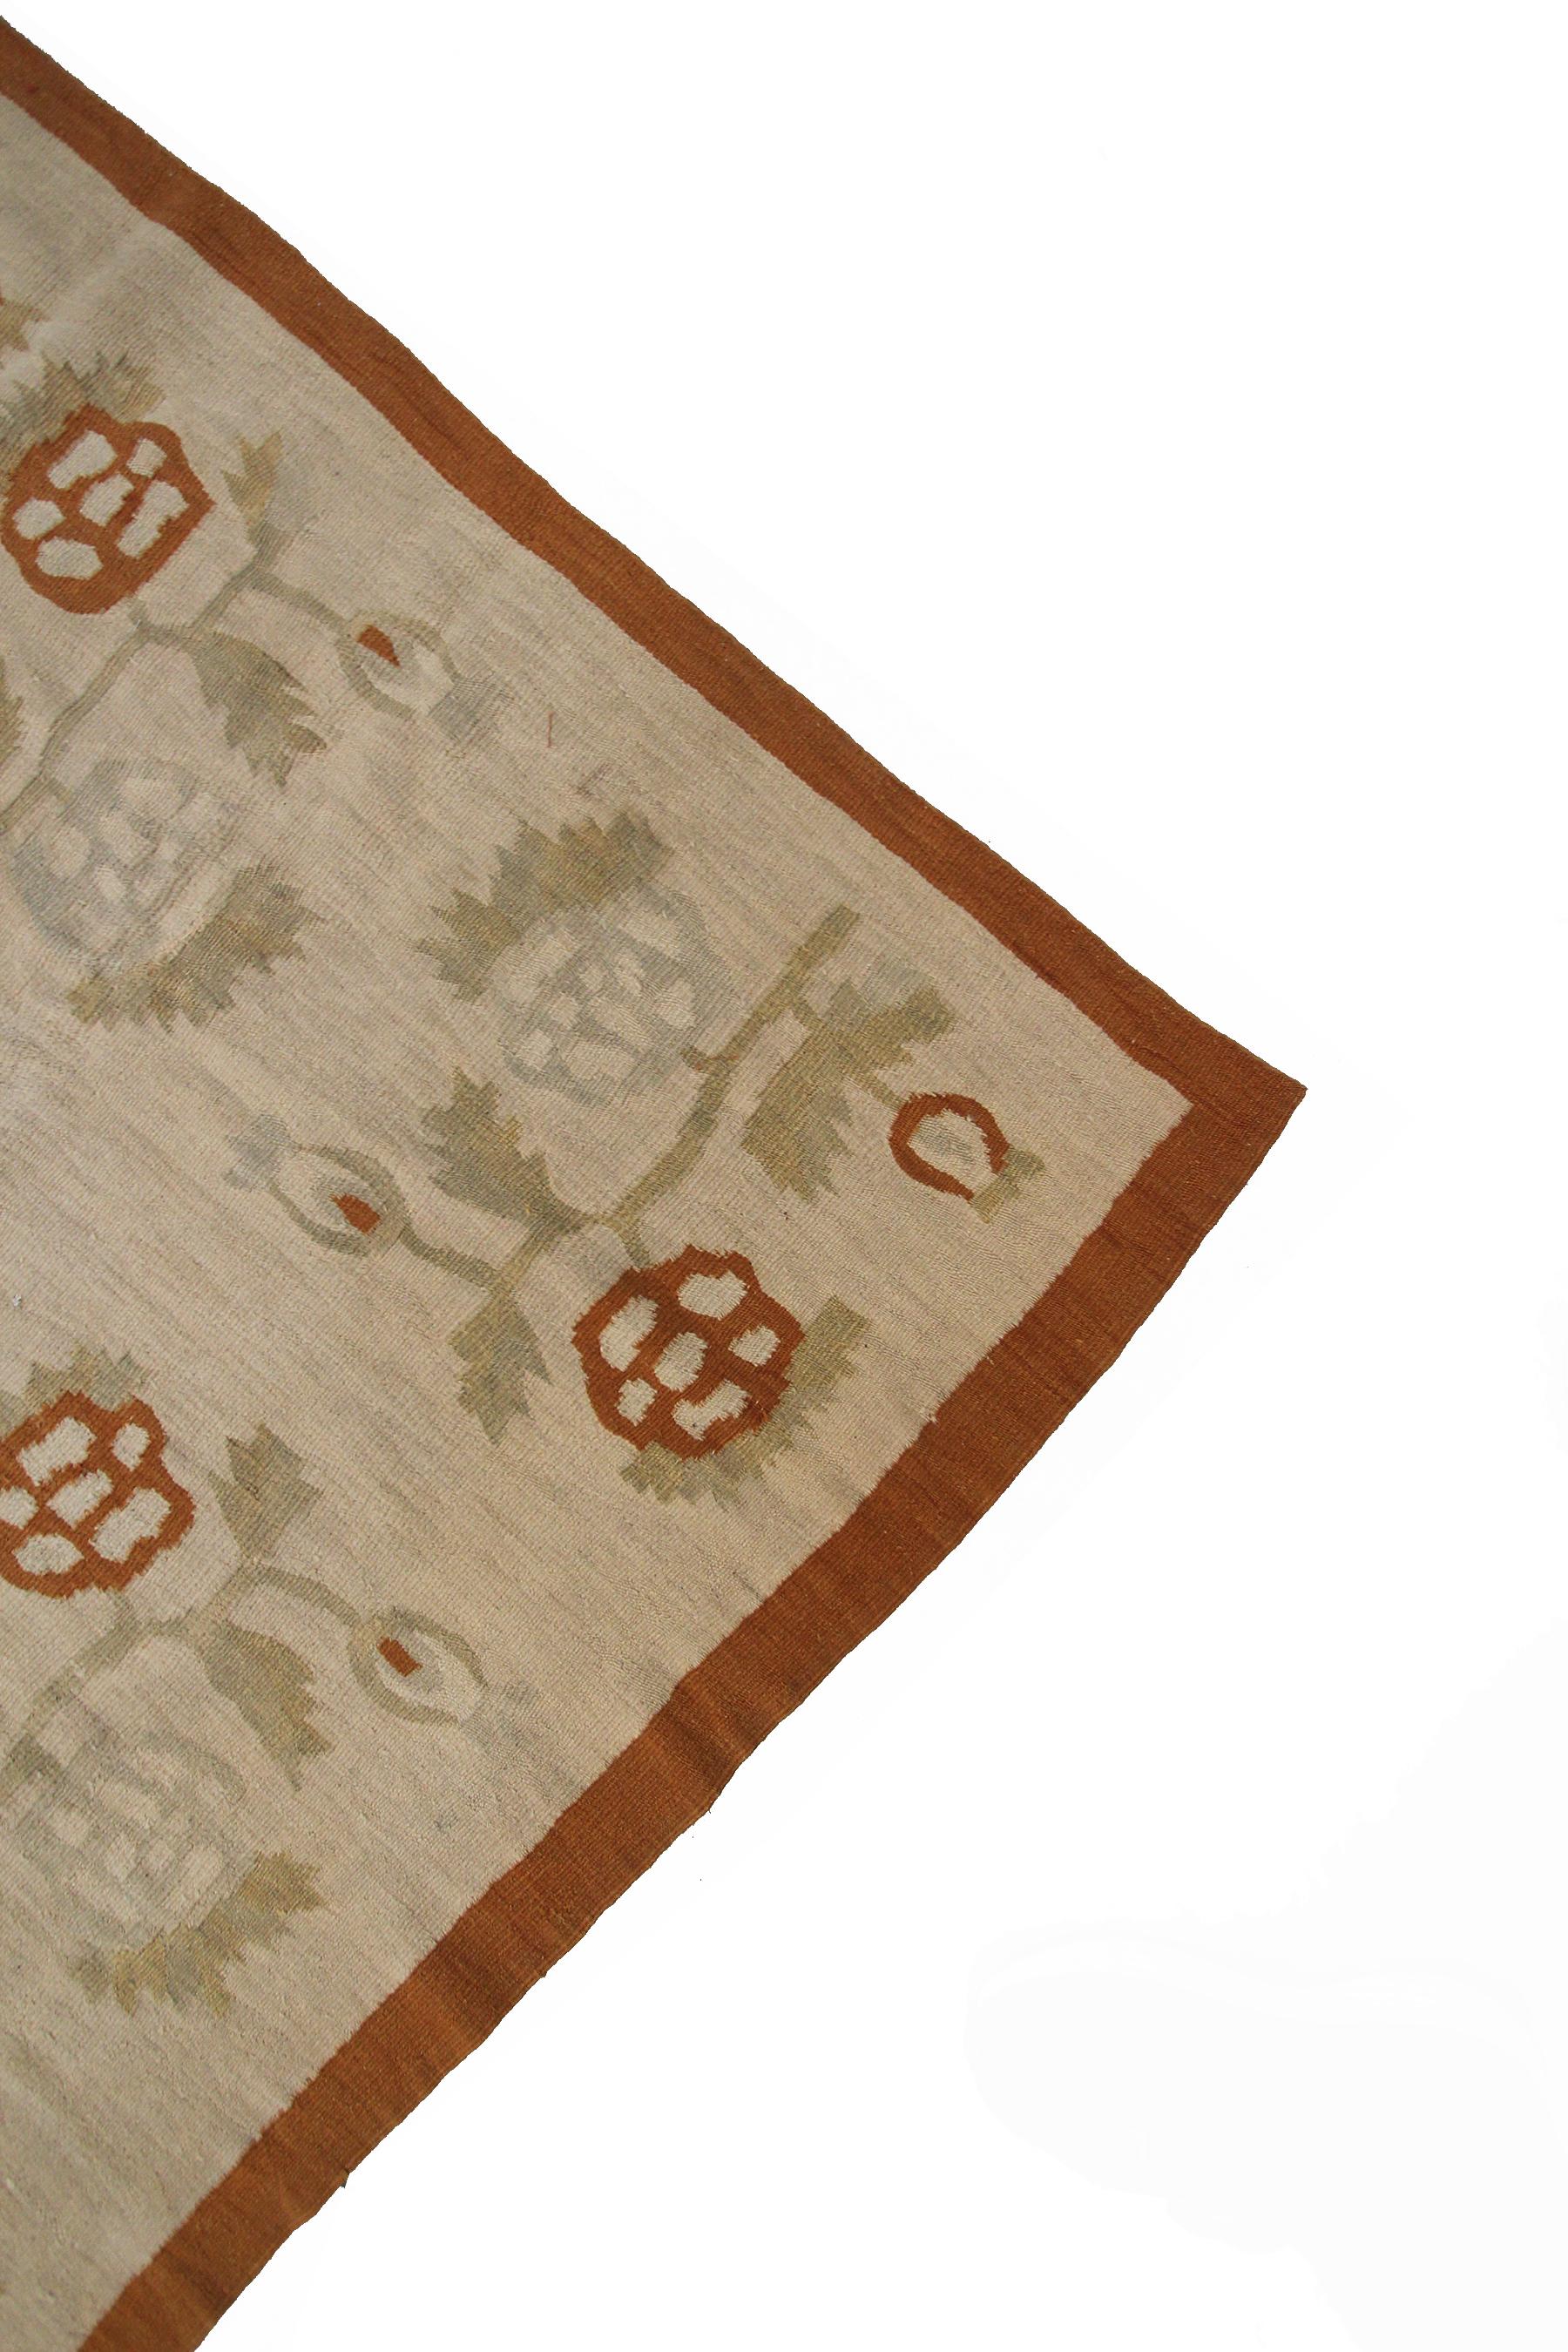 Vintage Bessarabian Kilim Rug Handwoven rug Tribal Geometric Rug 6x9 175cm x 264 For Sale 1